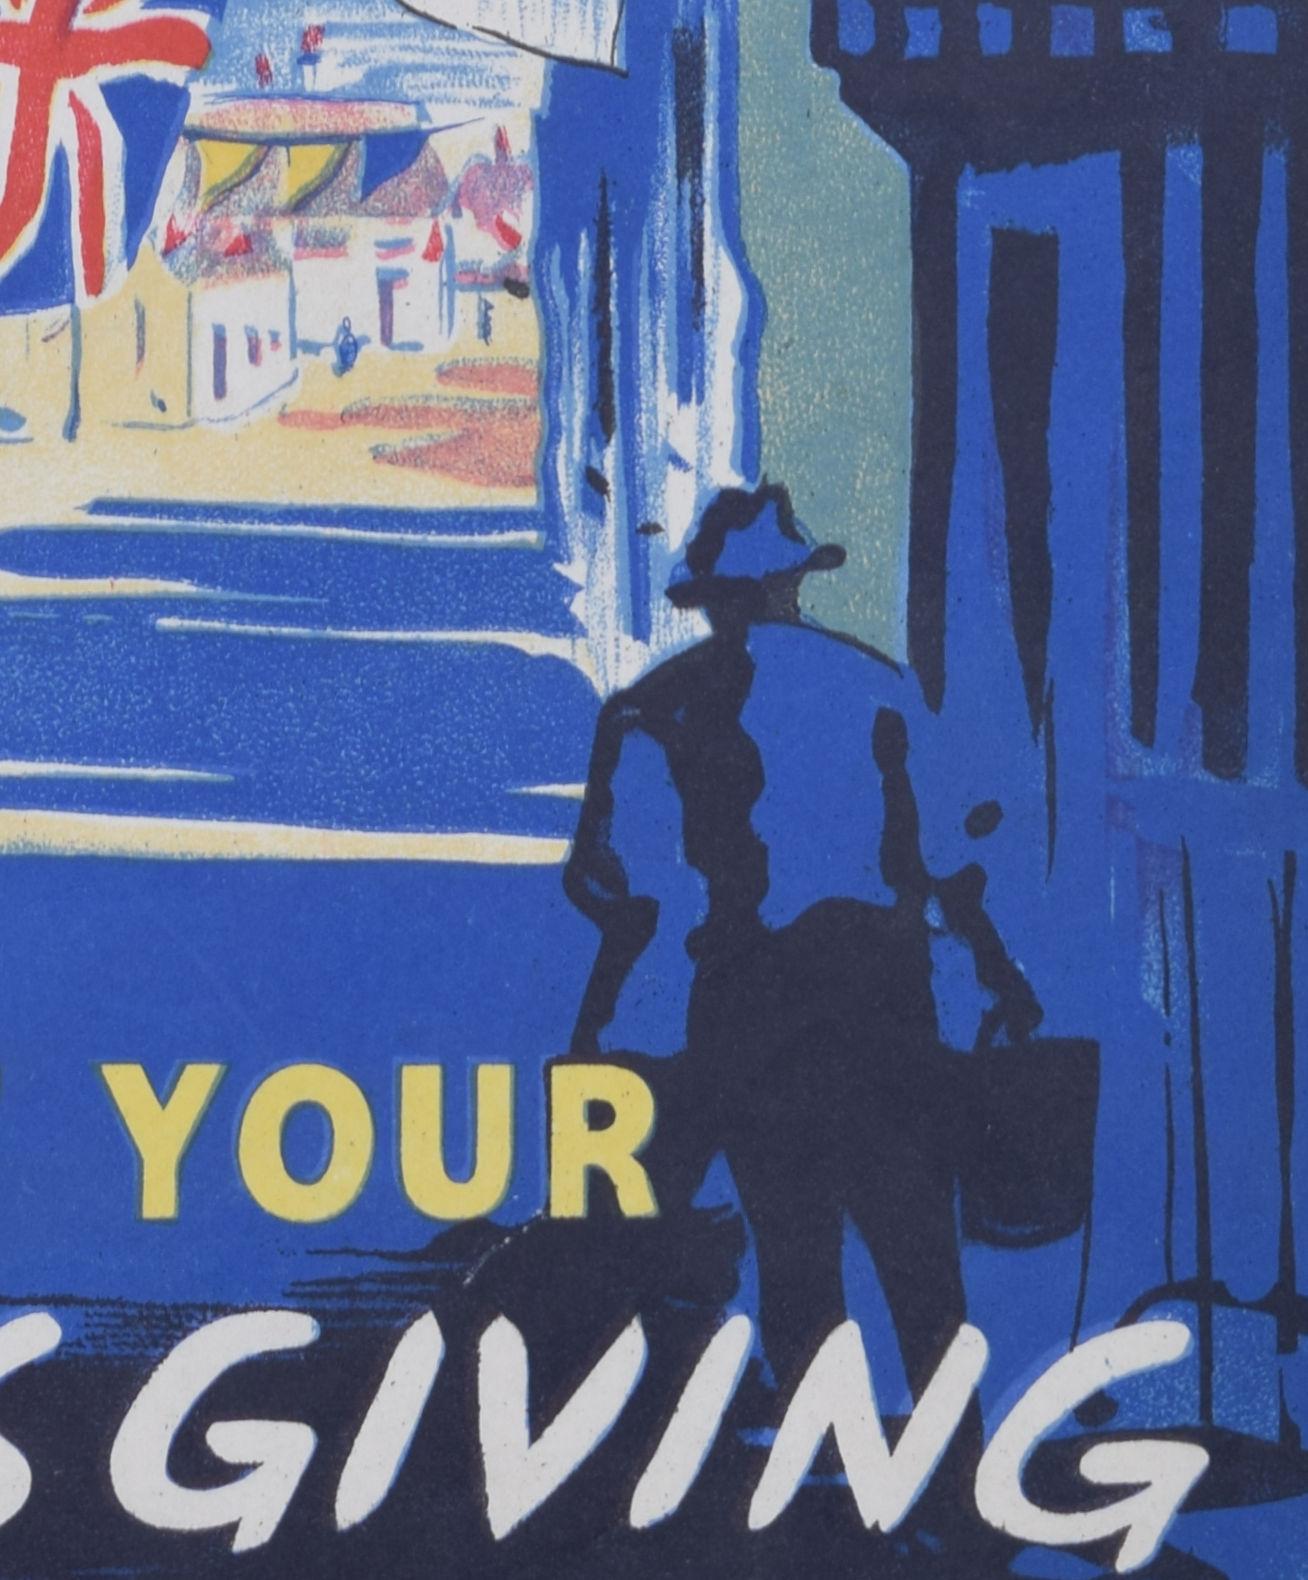 Give Thanks By Saving original vintage National Savings poster For Sale 4